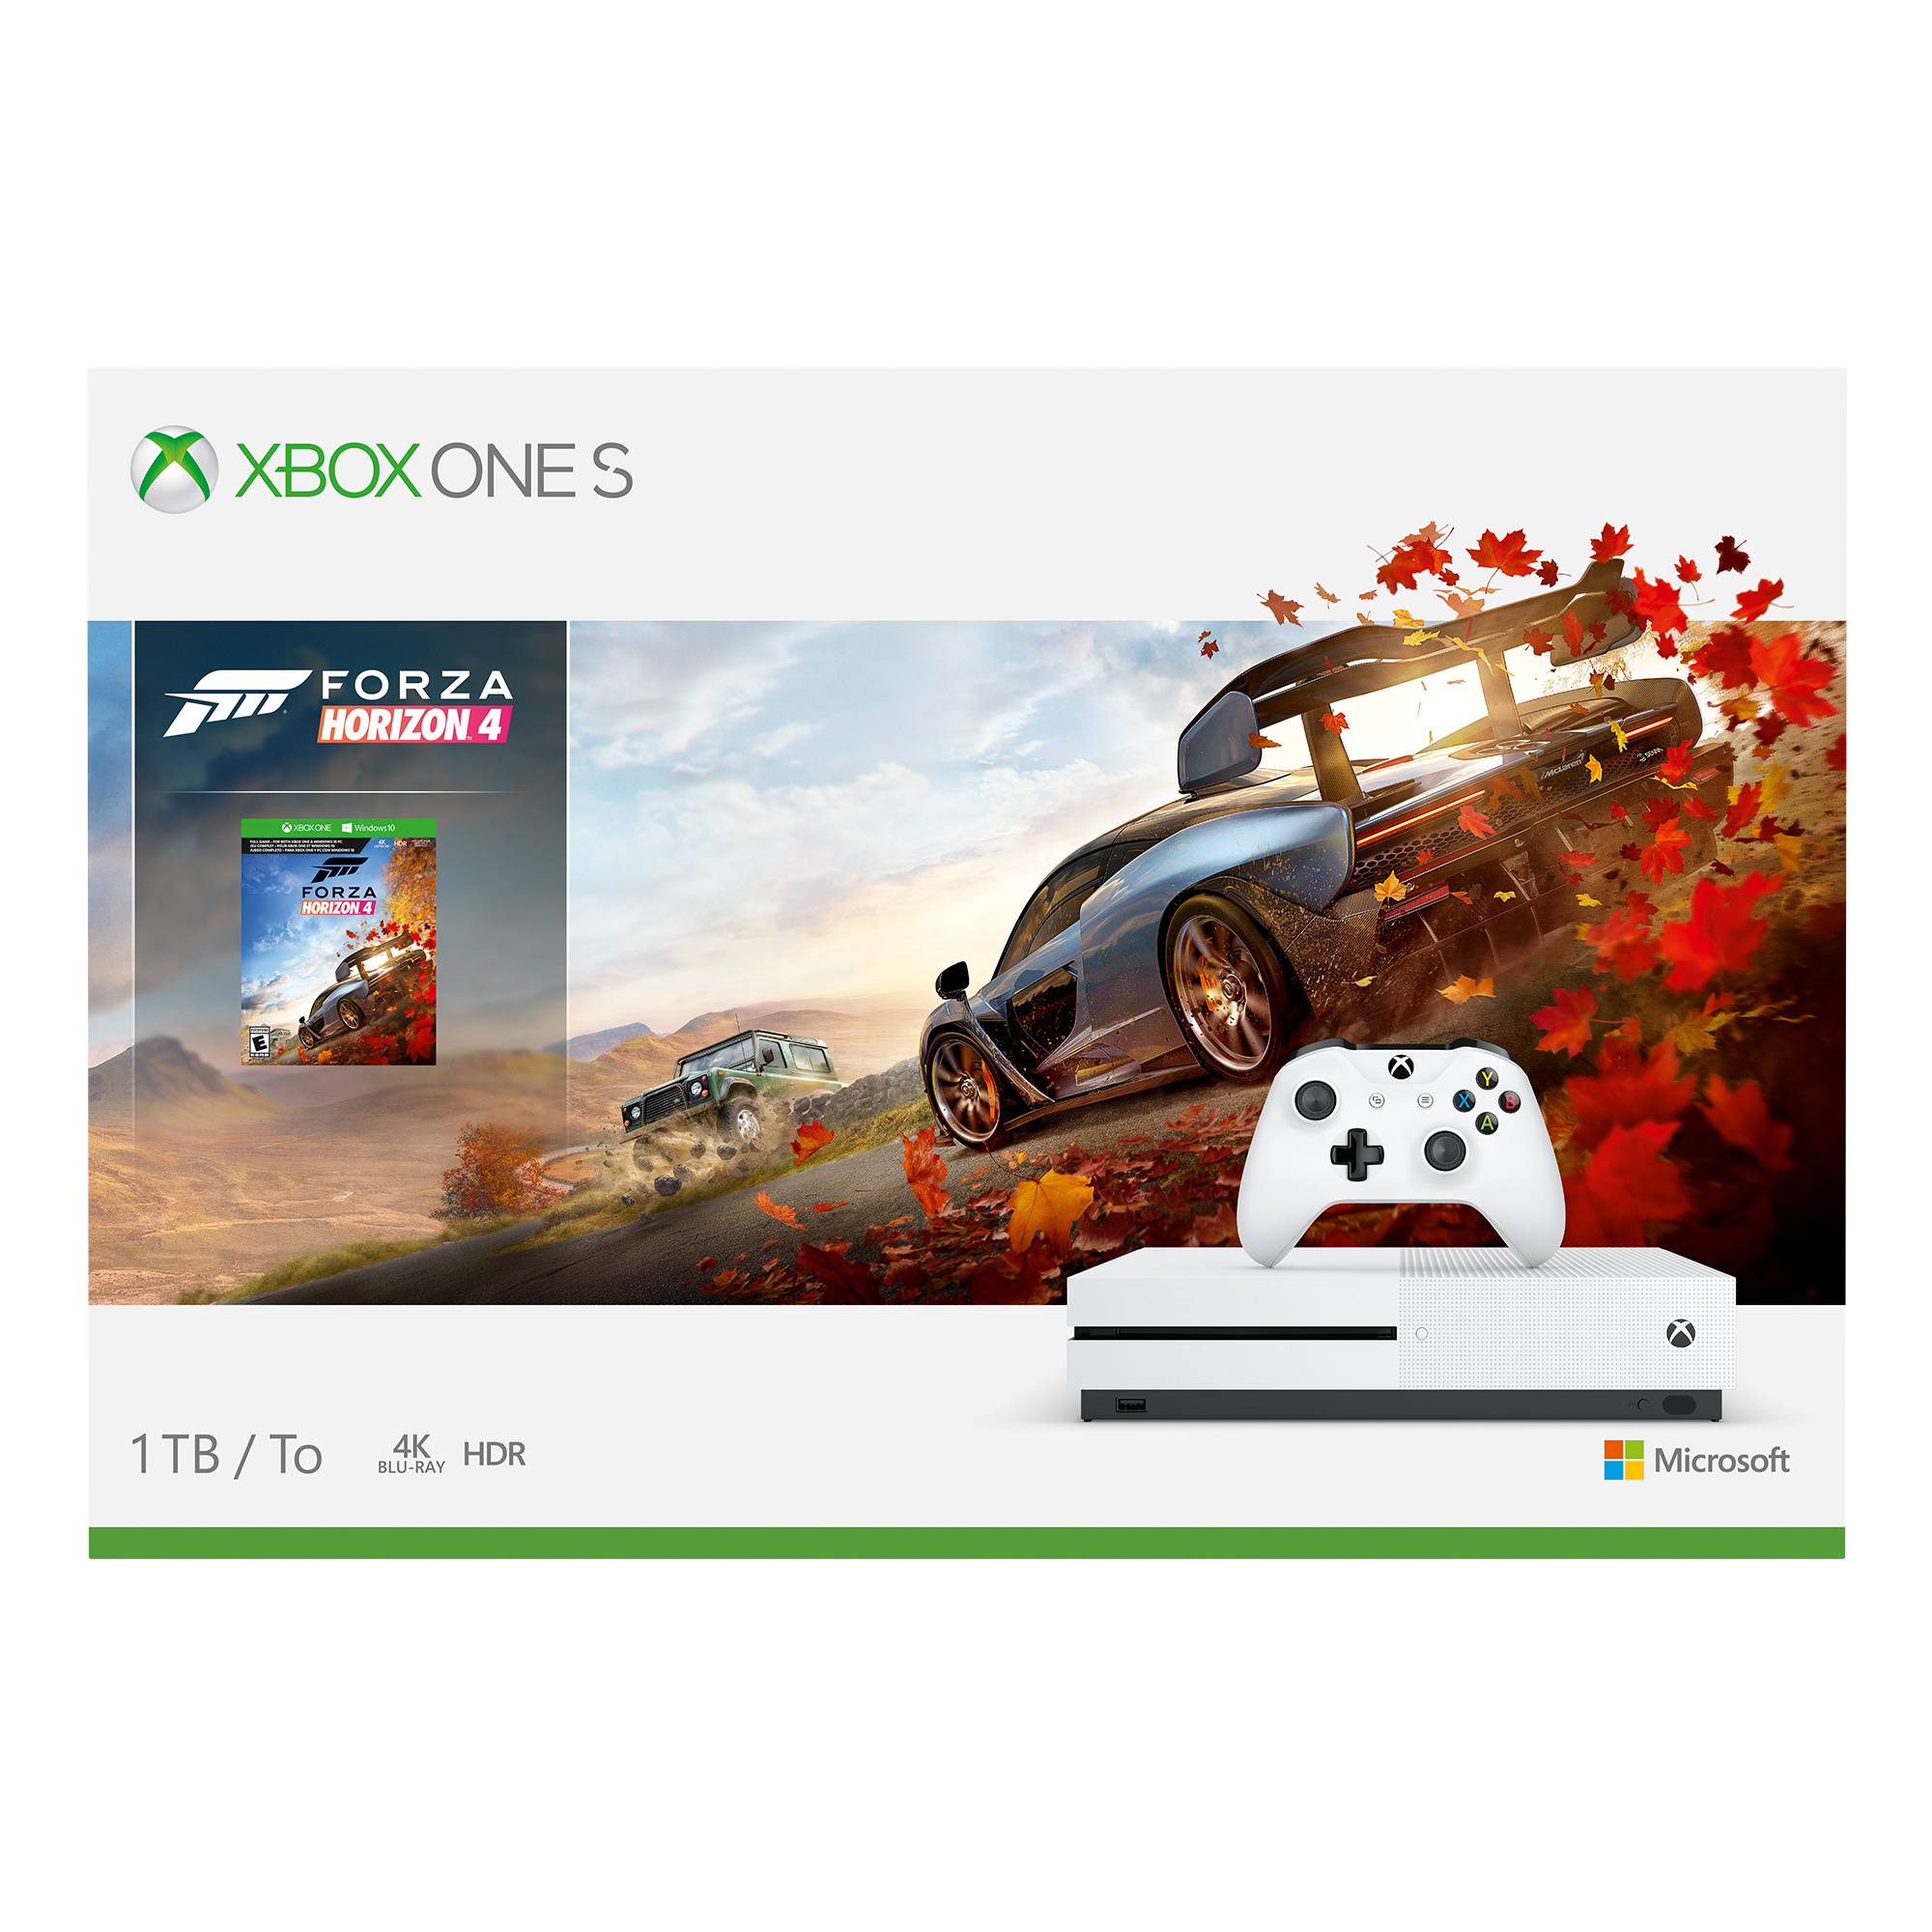 Microsoft Xbox One S 1TB Forza Horizon 4 Bundle, White, 234-00552 - image 3 of 14